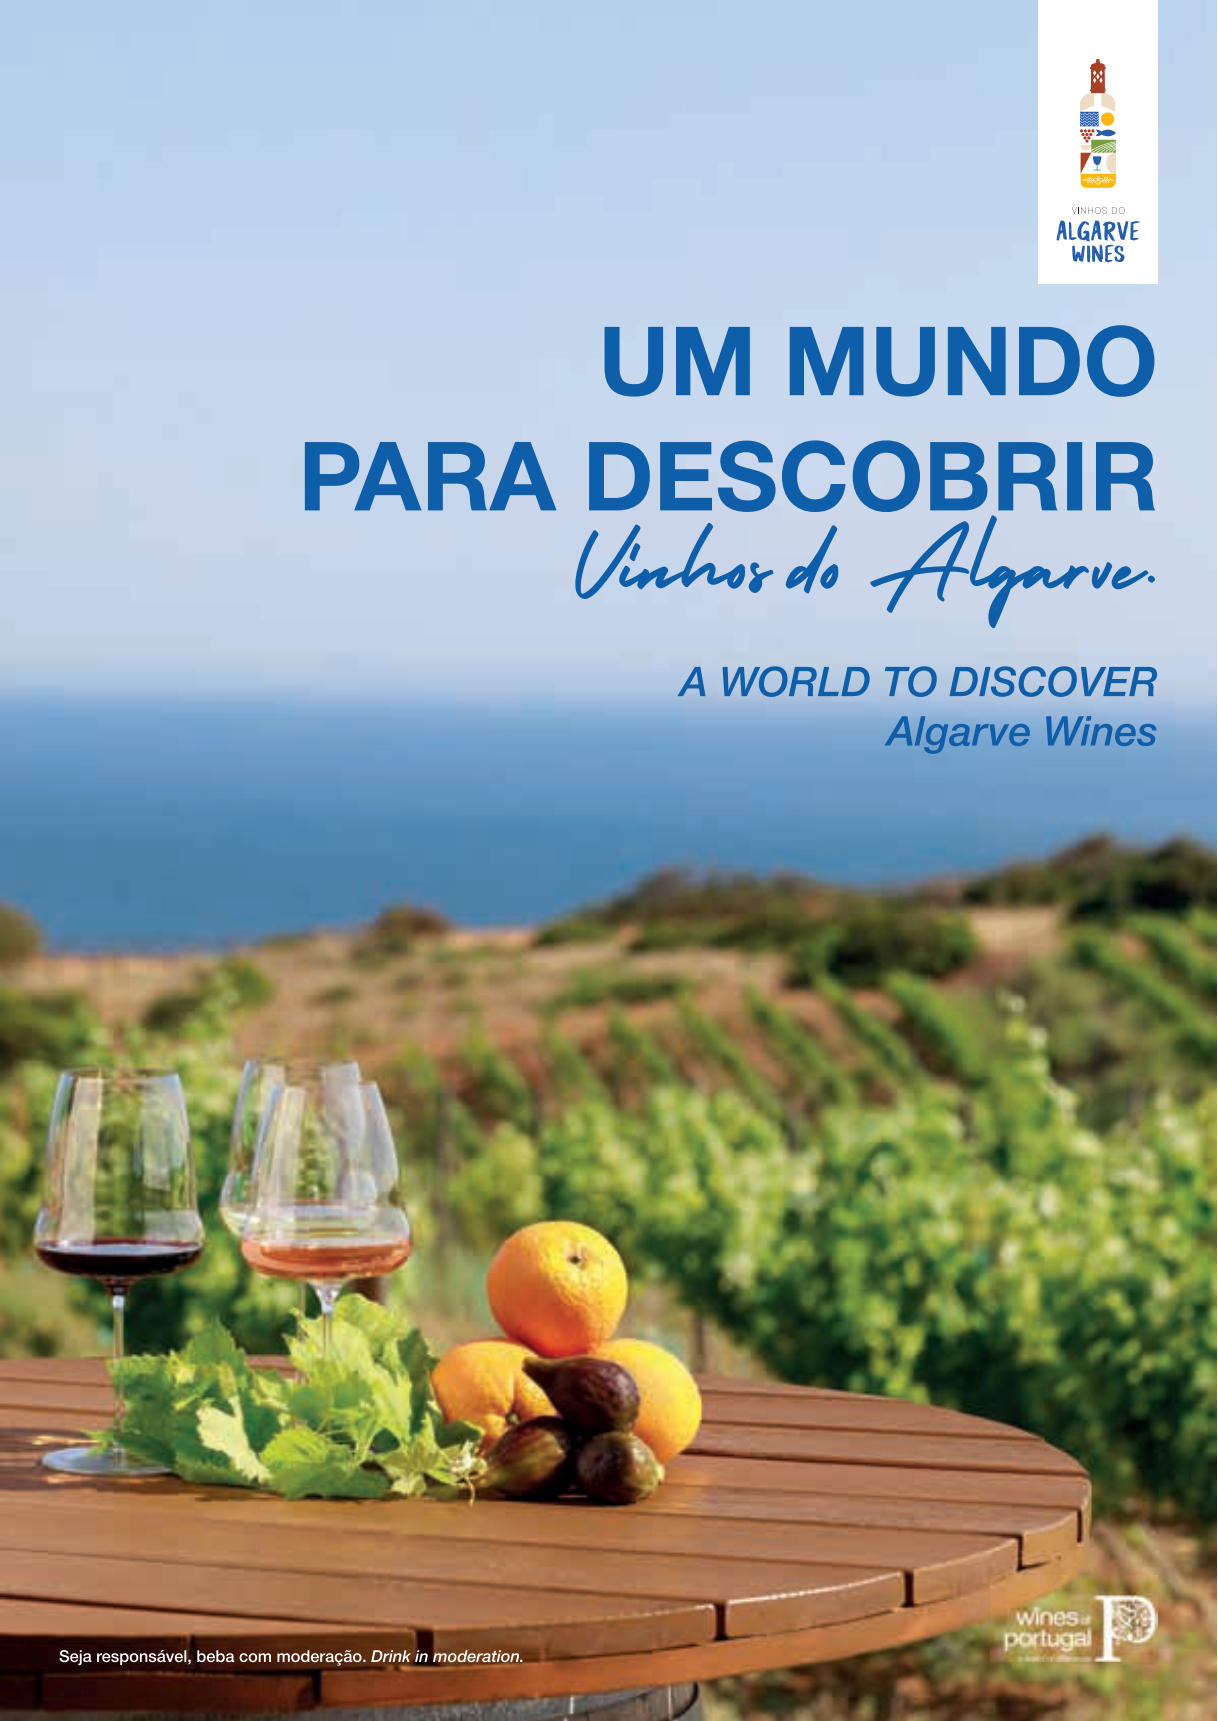 Vinhos-do-Algarve-PUB-1.jpg